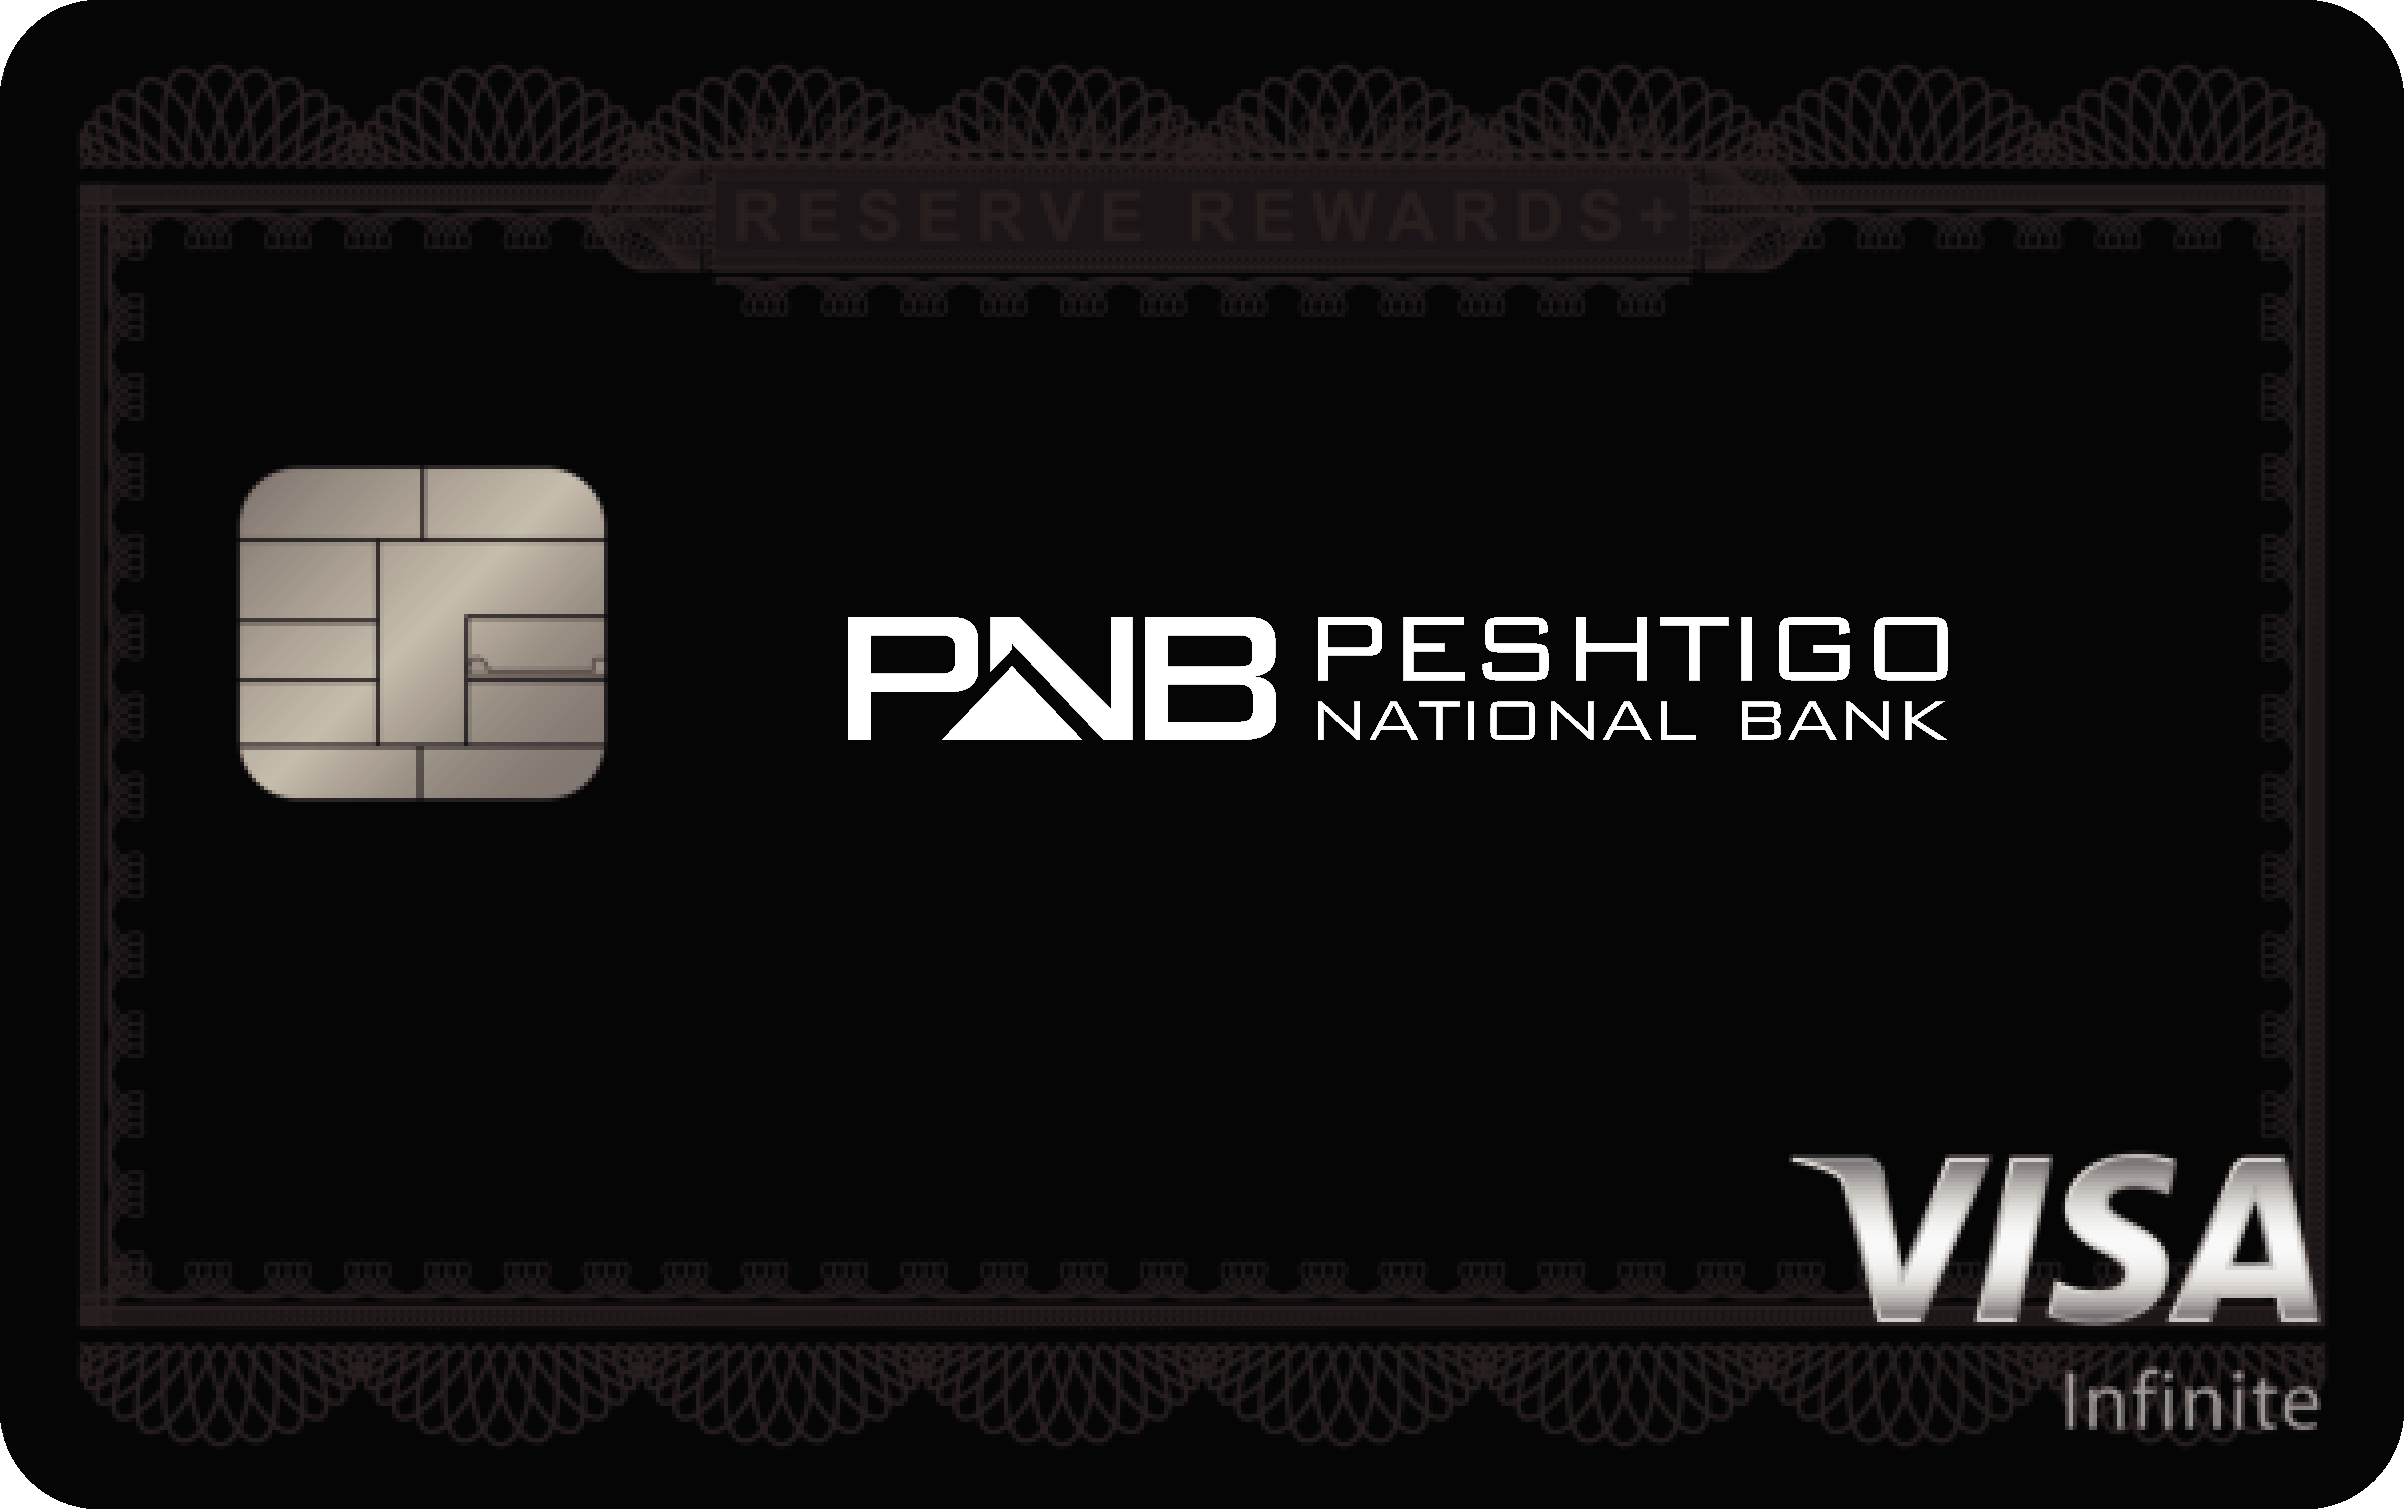 Peshtigo National Bank